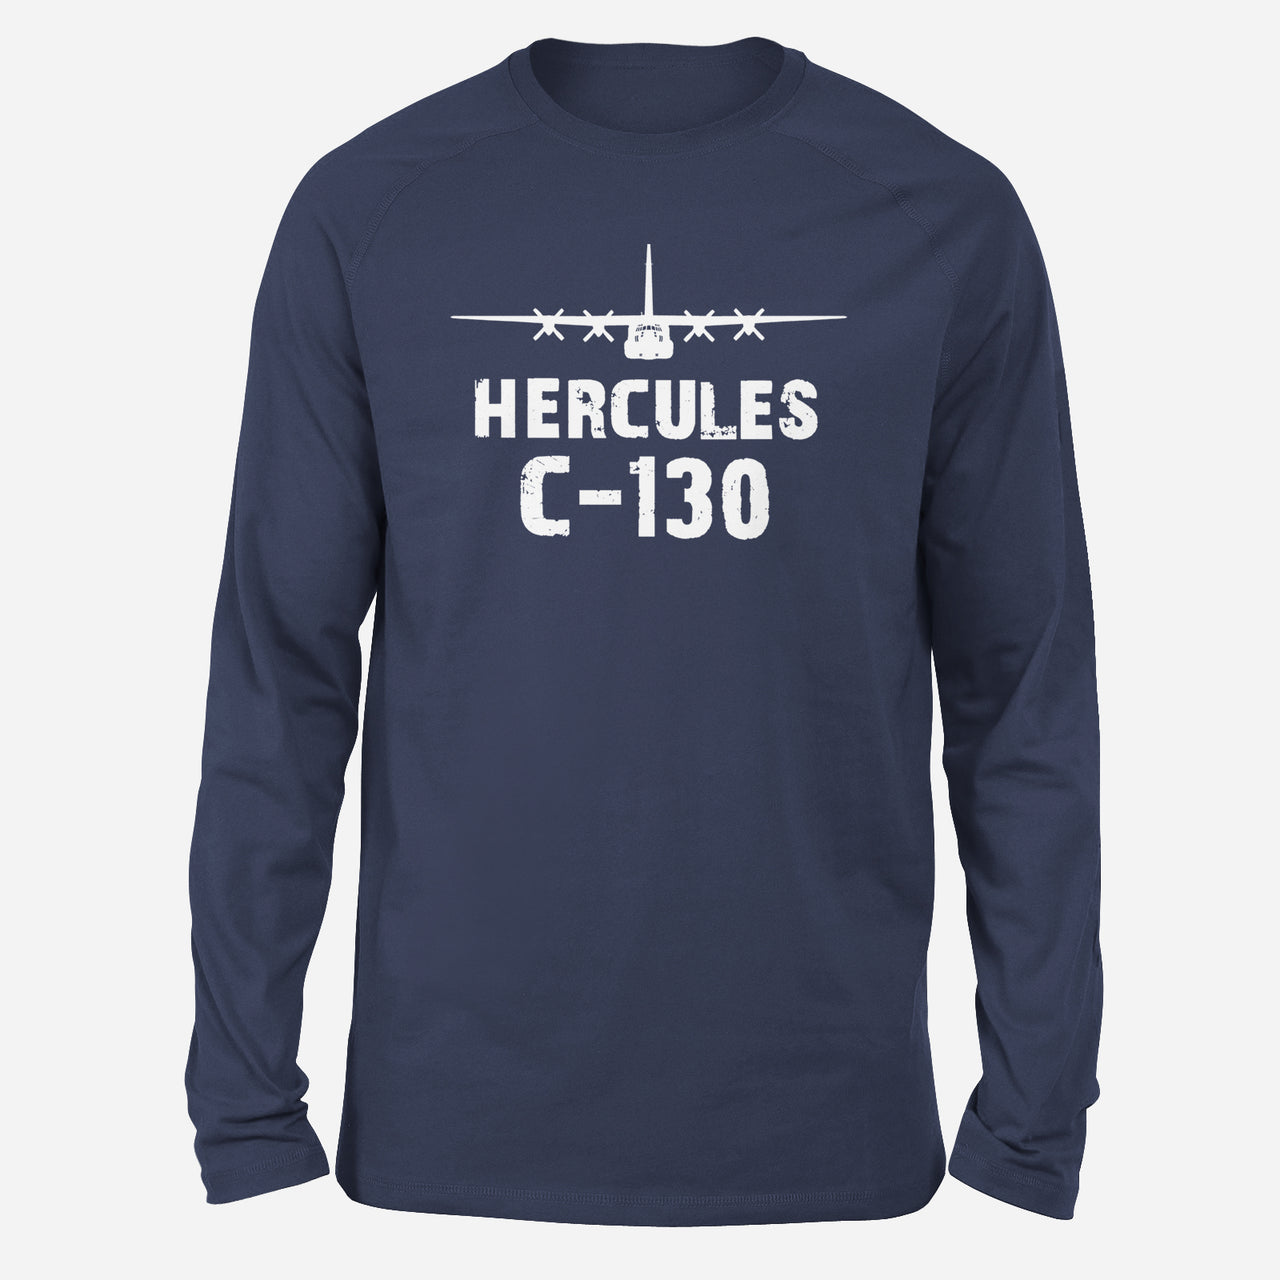 Hercules C-130 & Plane Designed Long-Sleeve T-Shirts